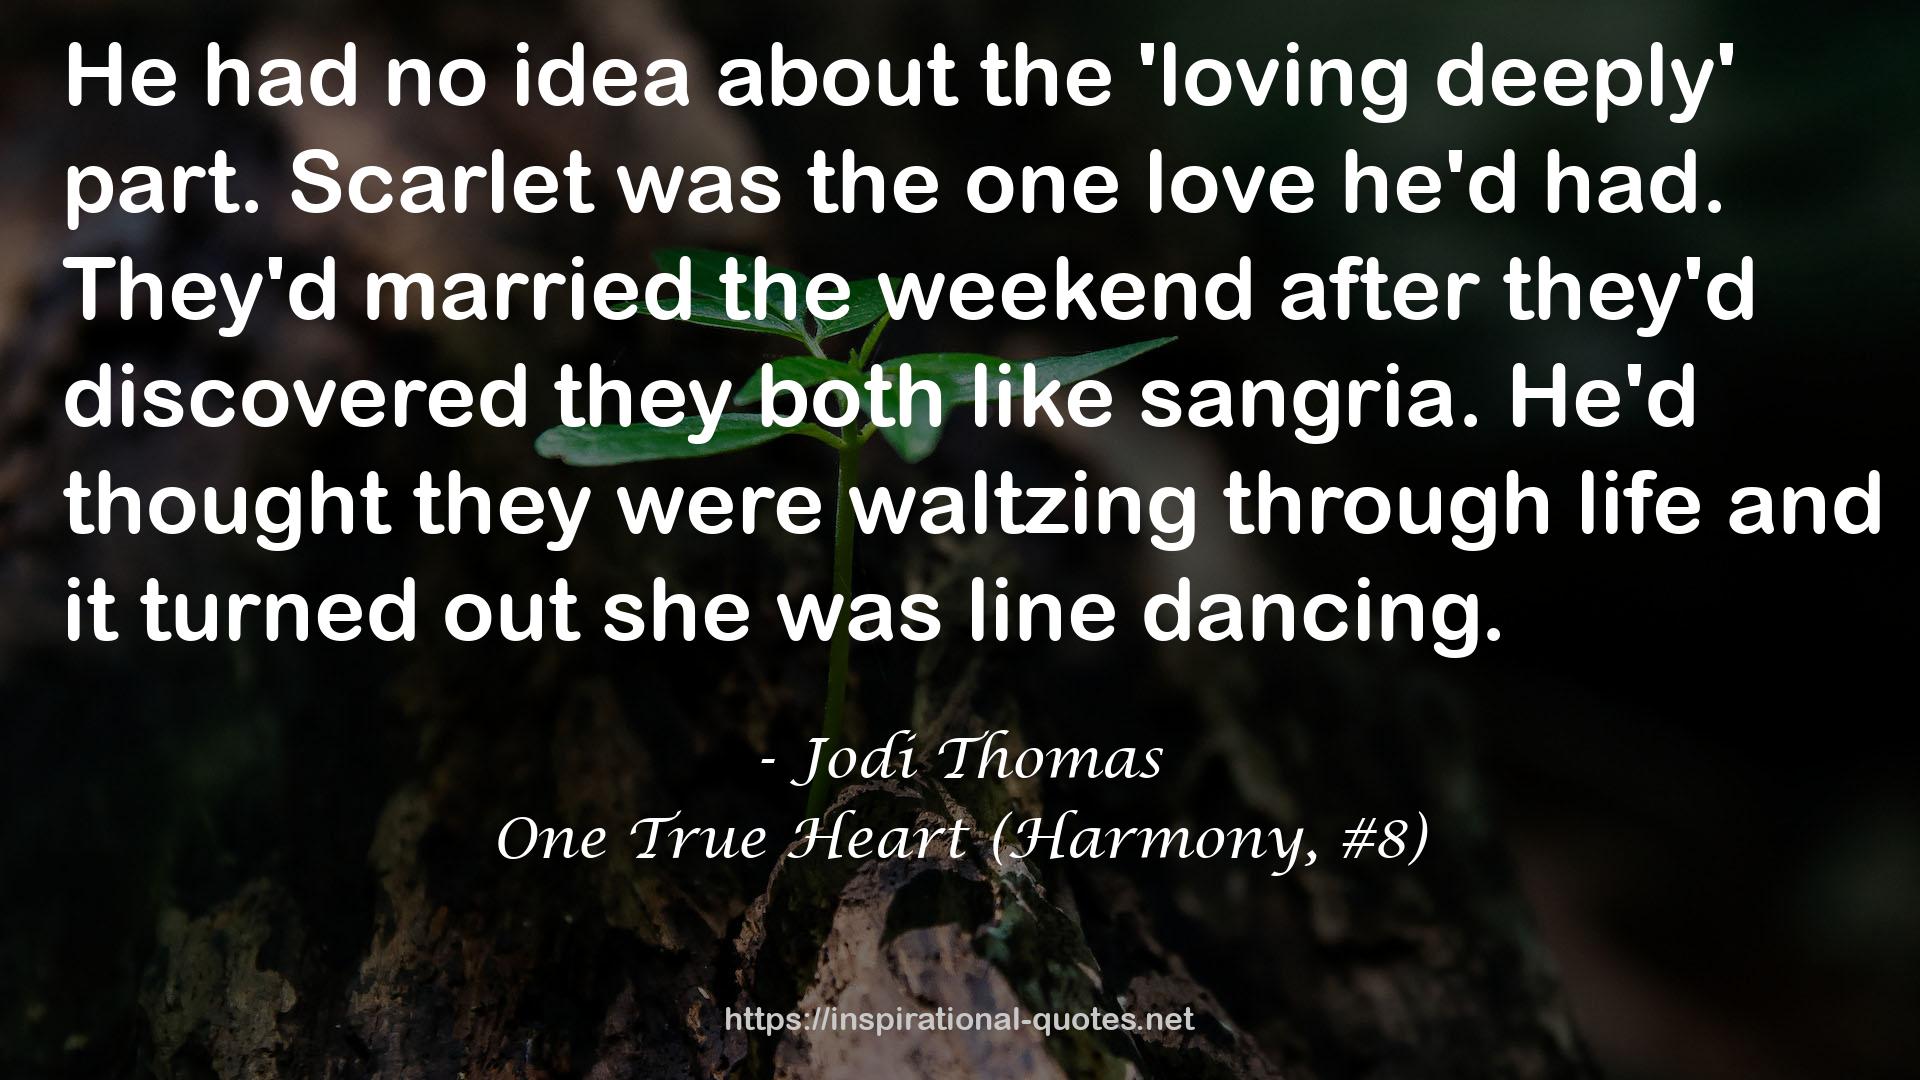 One True Heart (Harmony, #8) QUOTES